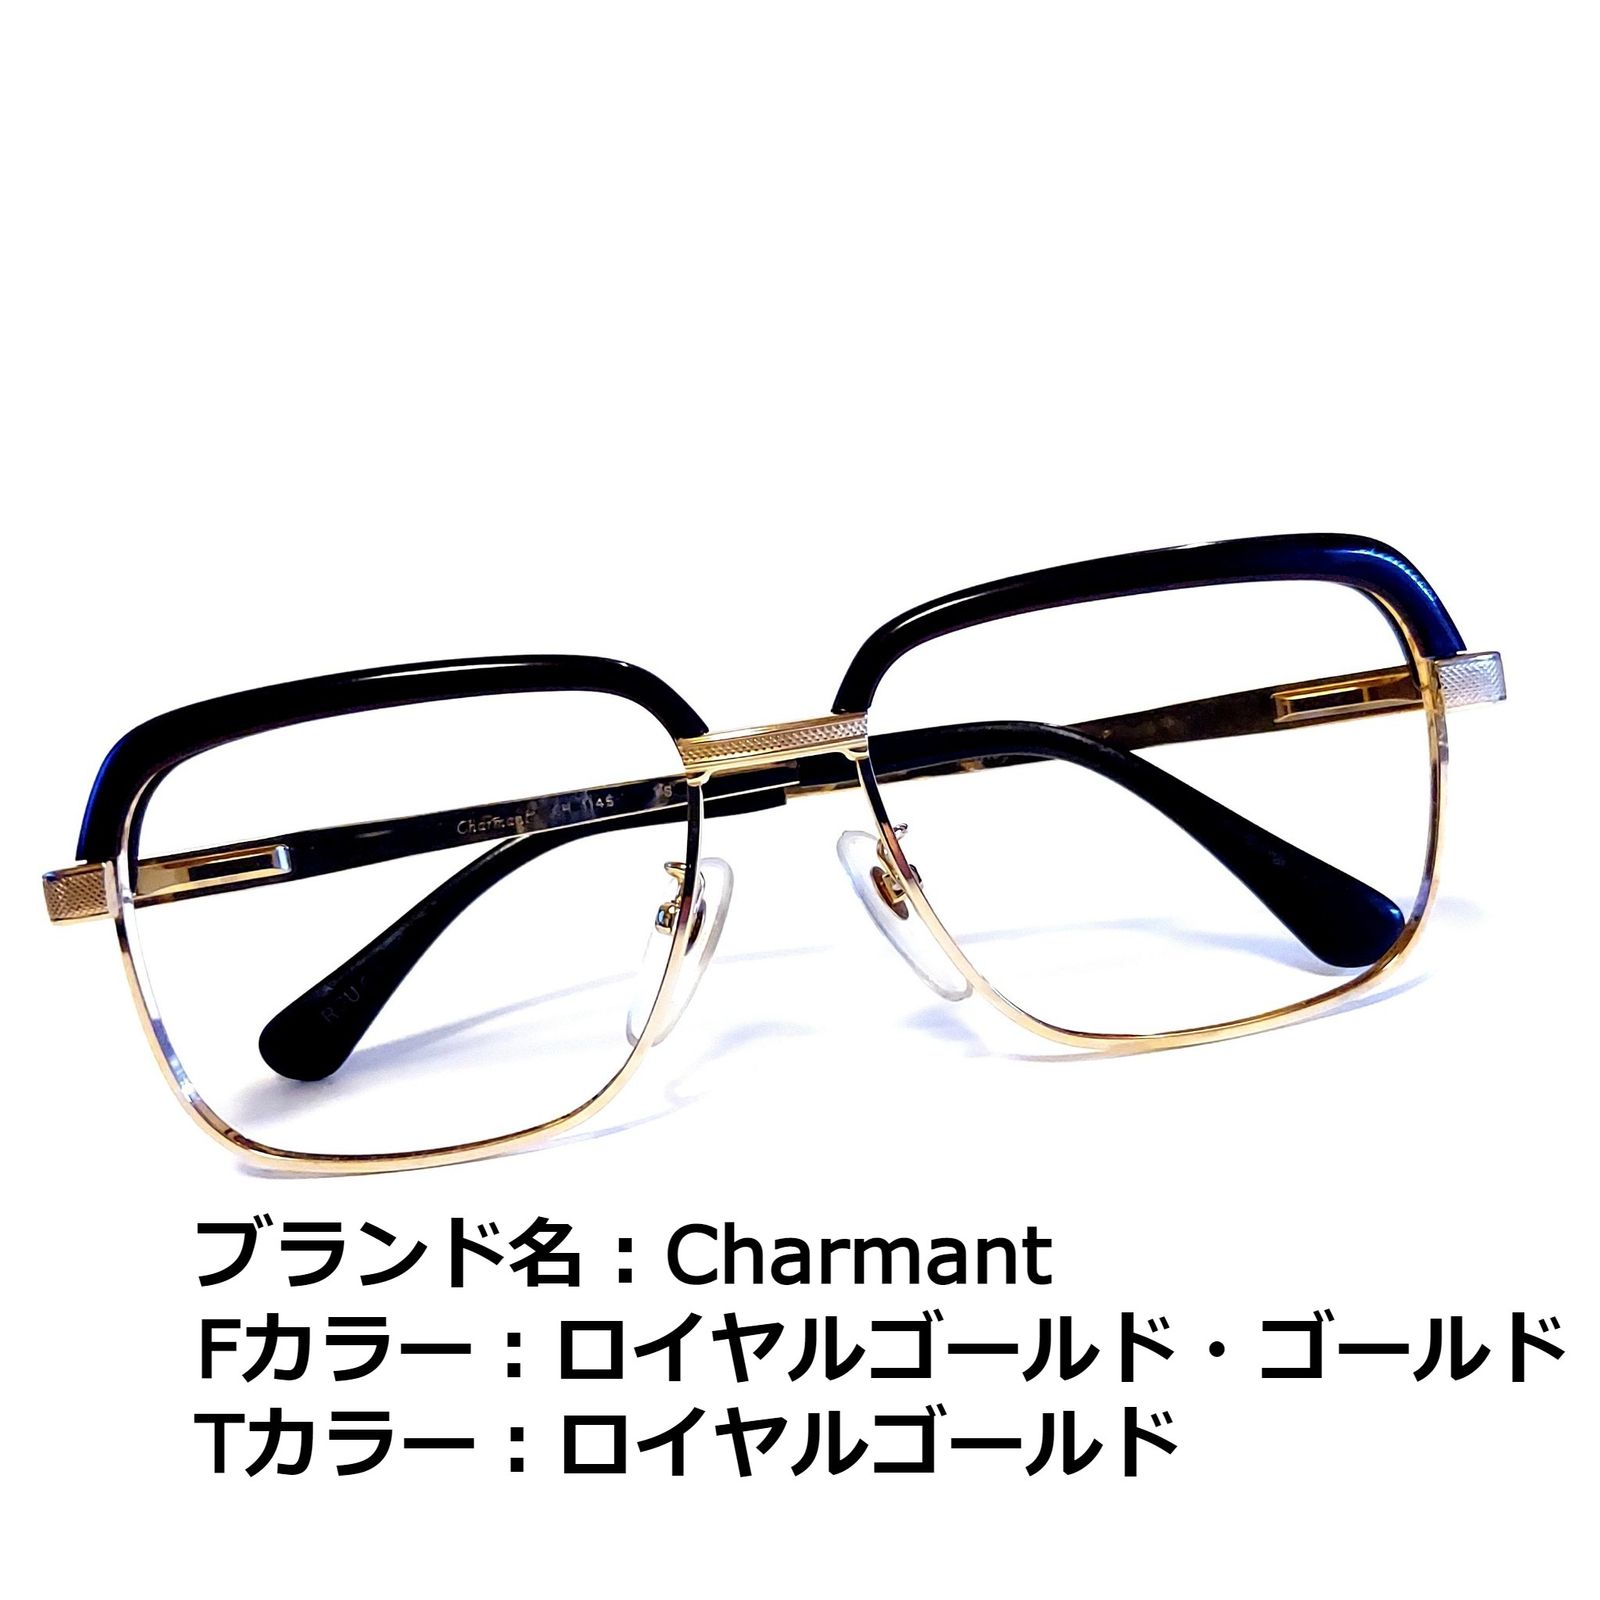 No.1573+メガネ Charmant【度数入り込み価格】 cosimoerrede.com